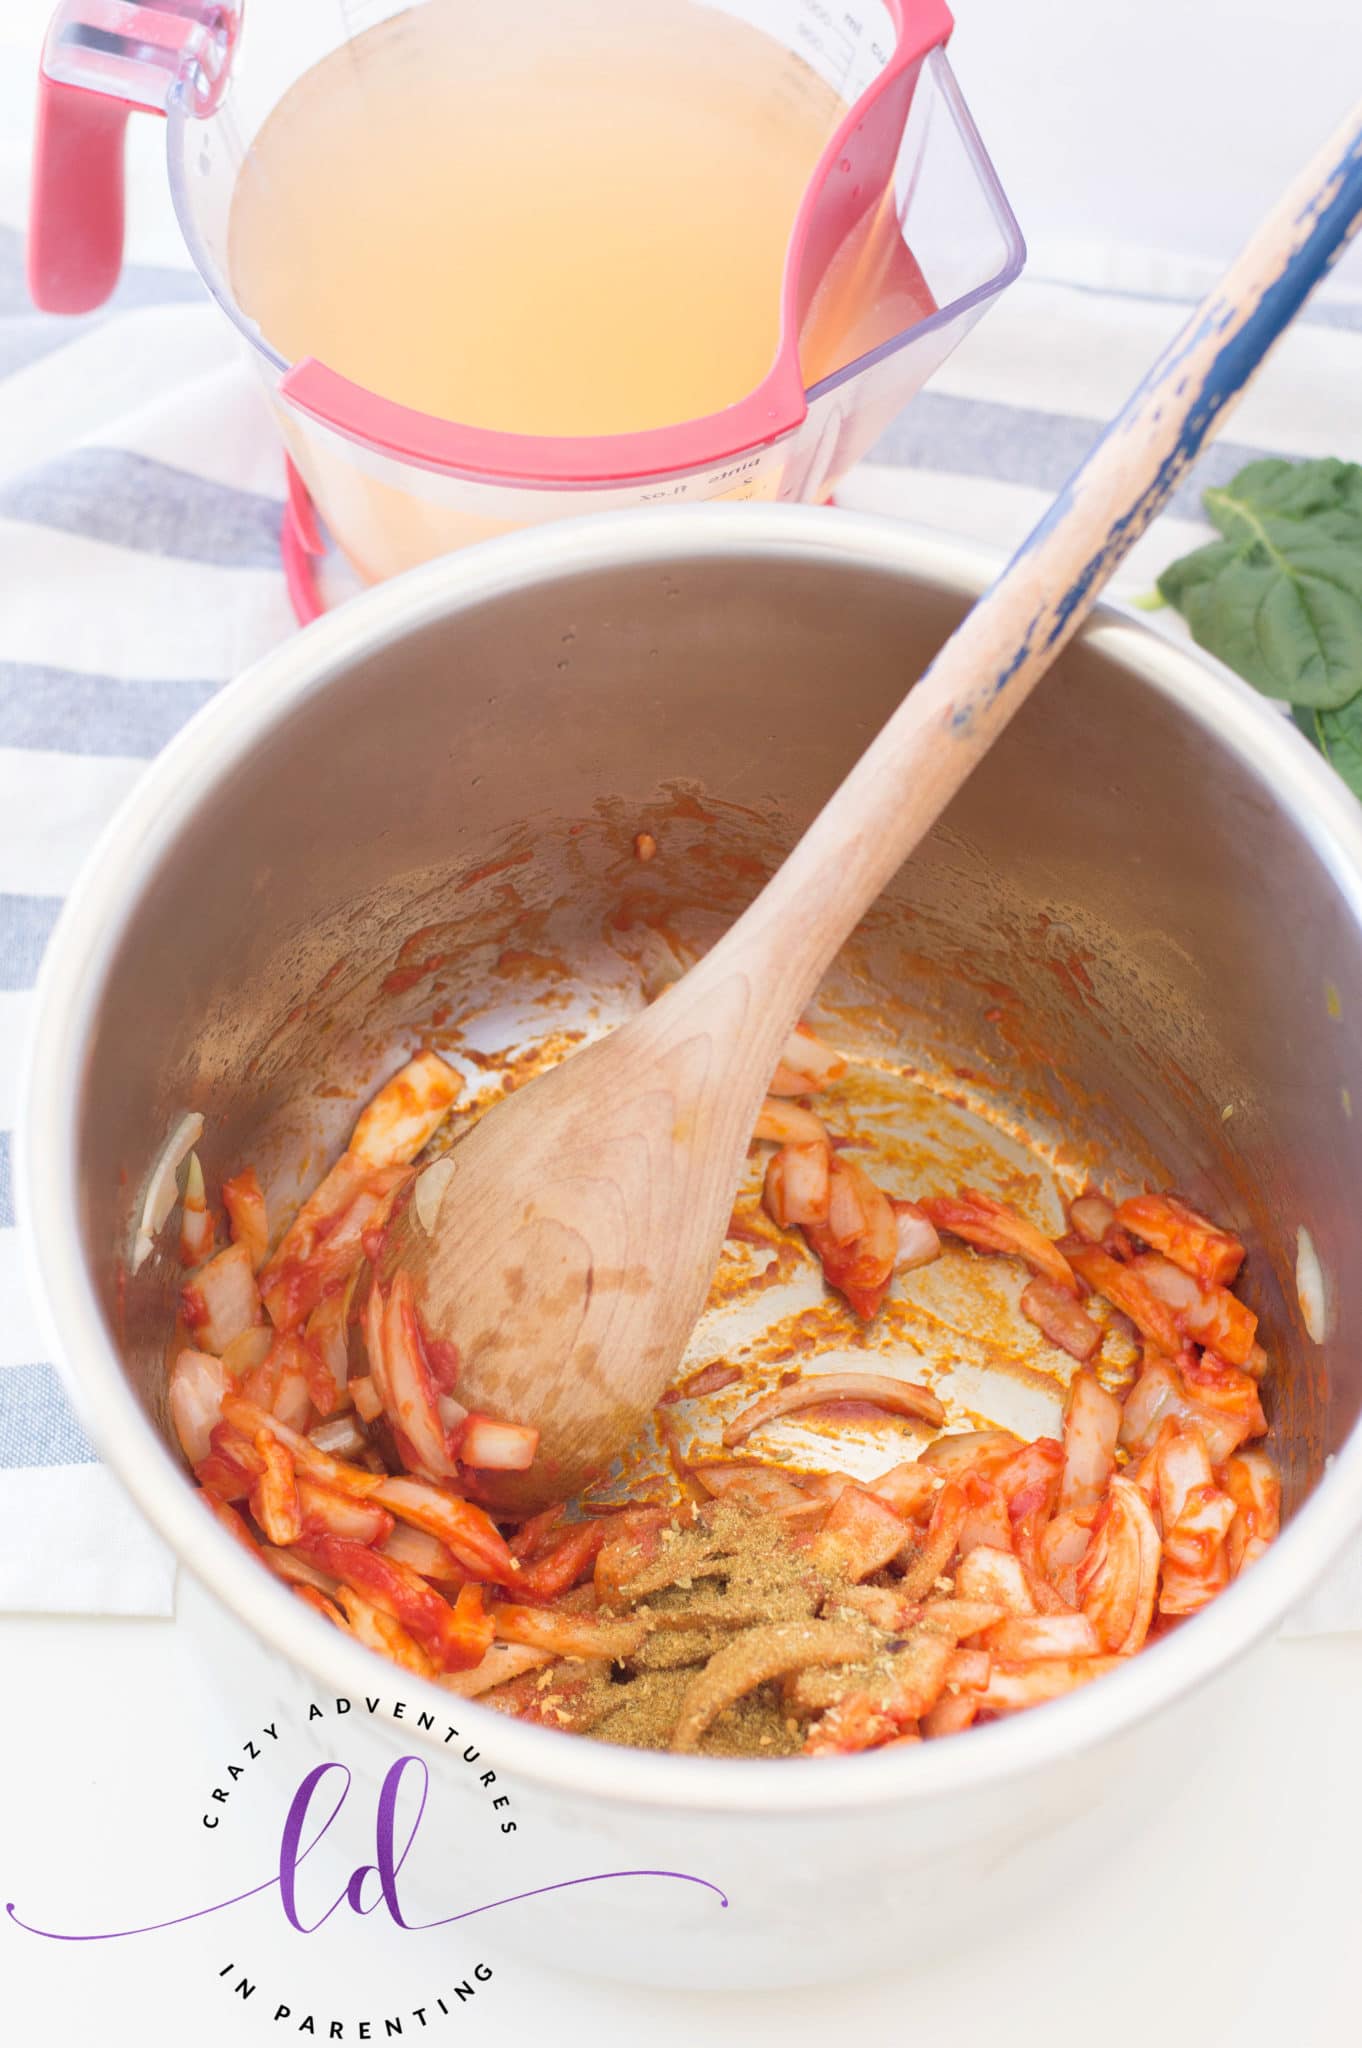 Stir in Seasonings to Make Instant Pot Tortellini Soup